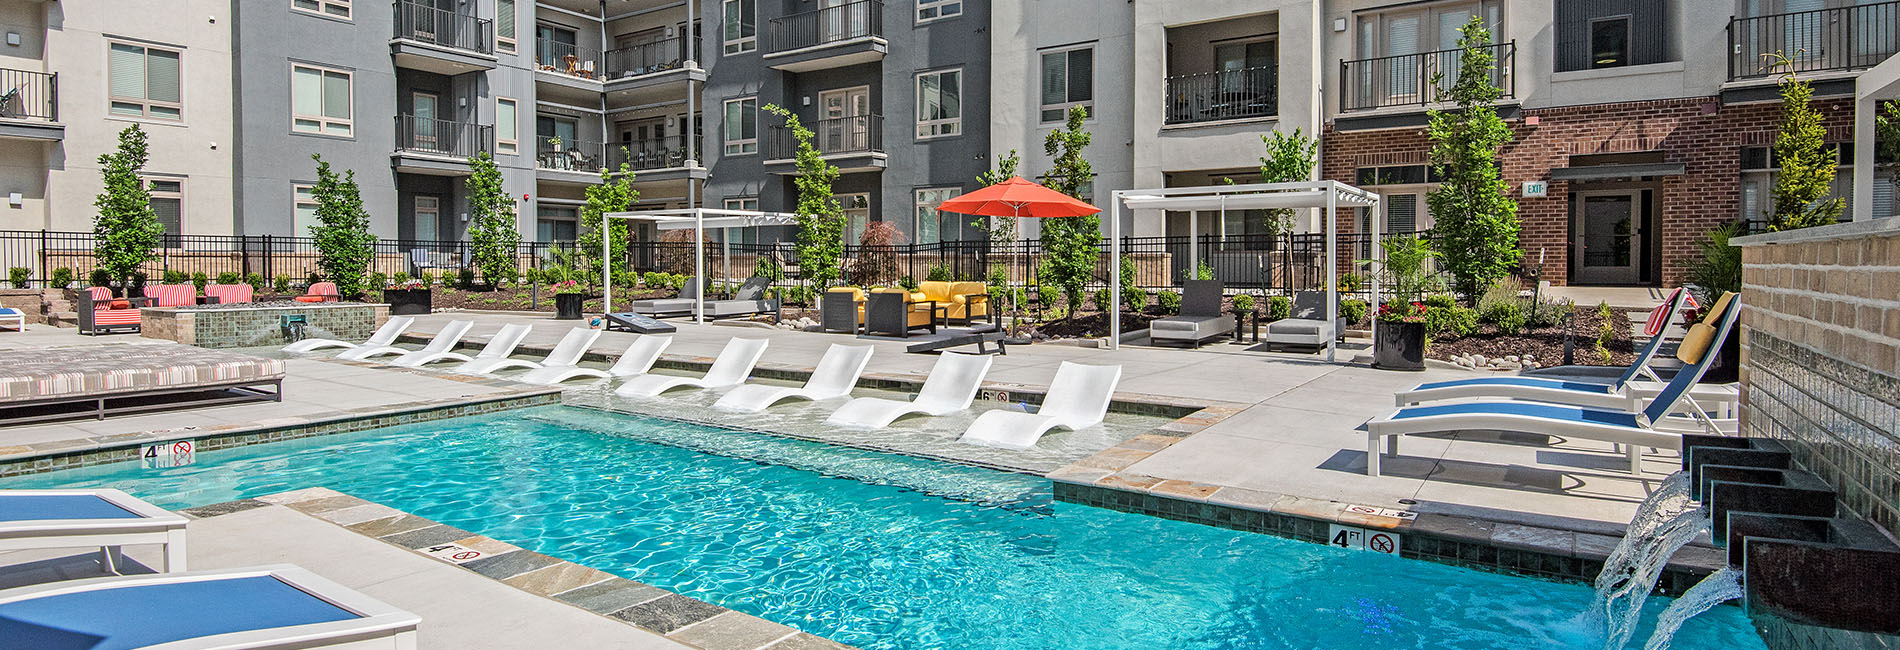 Swimming Pool at Avenue 80 Apartments